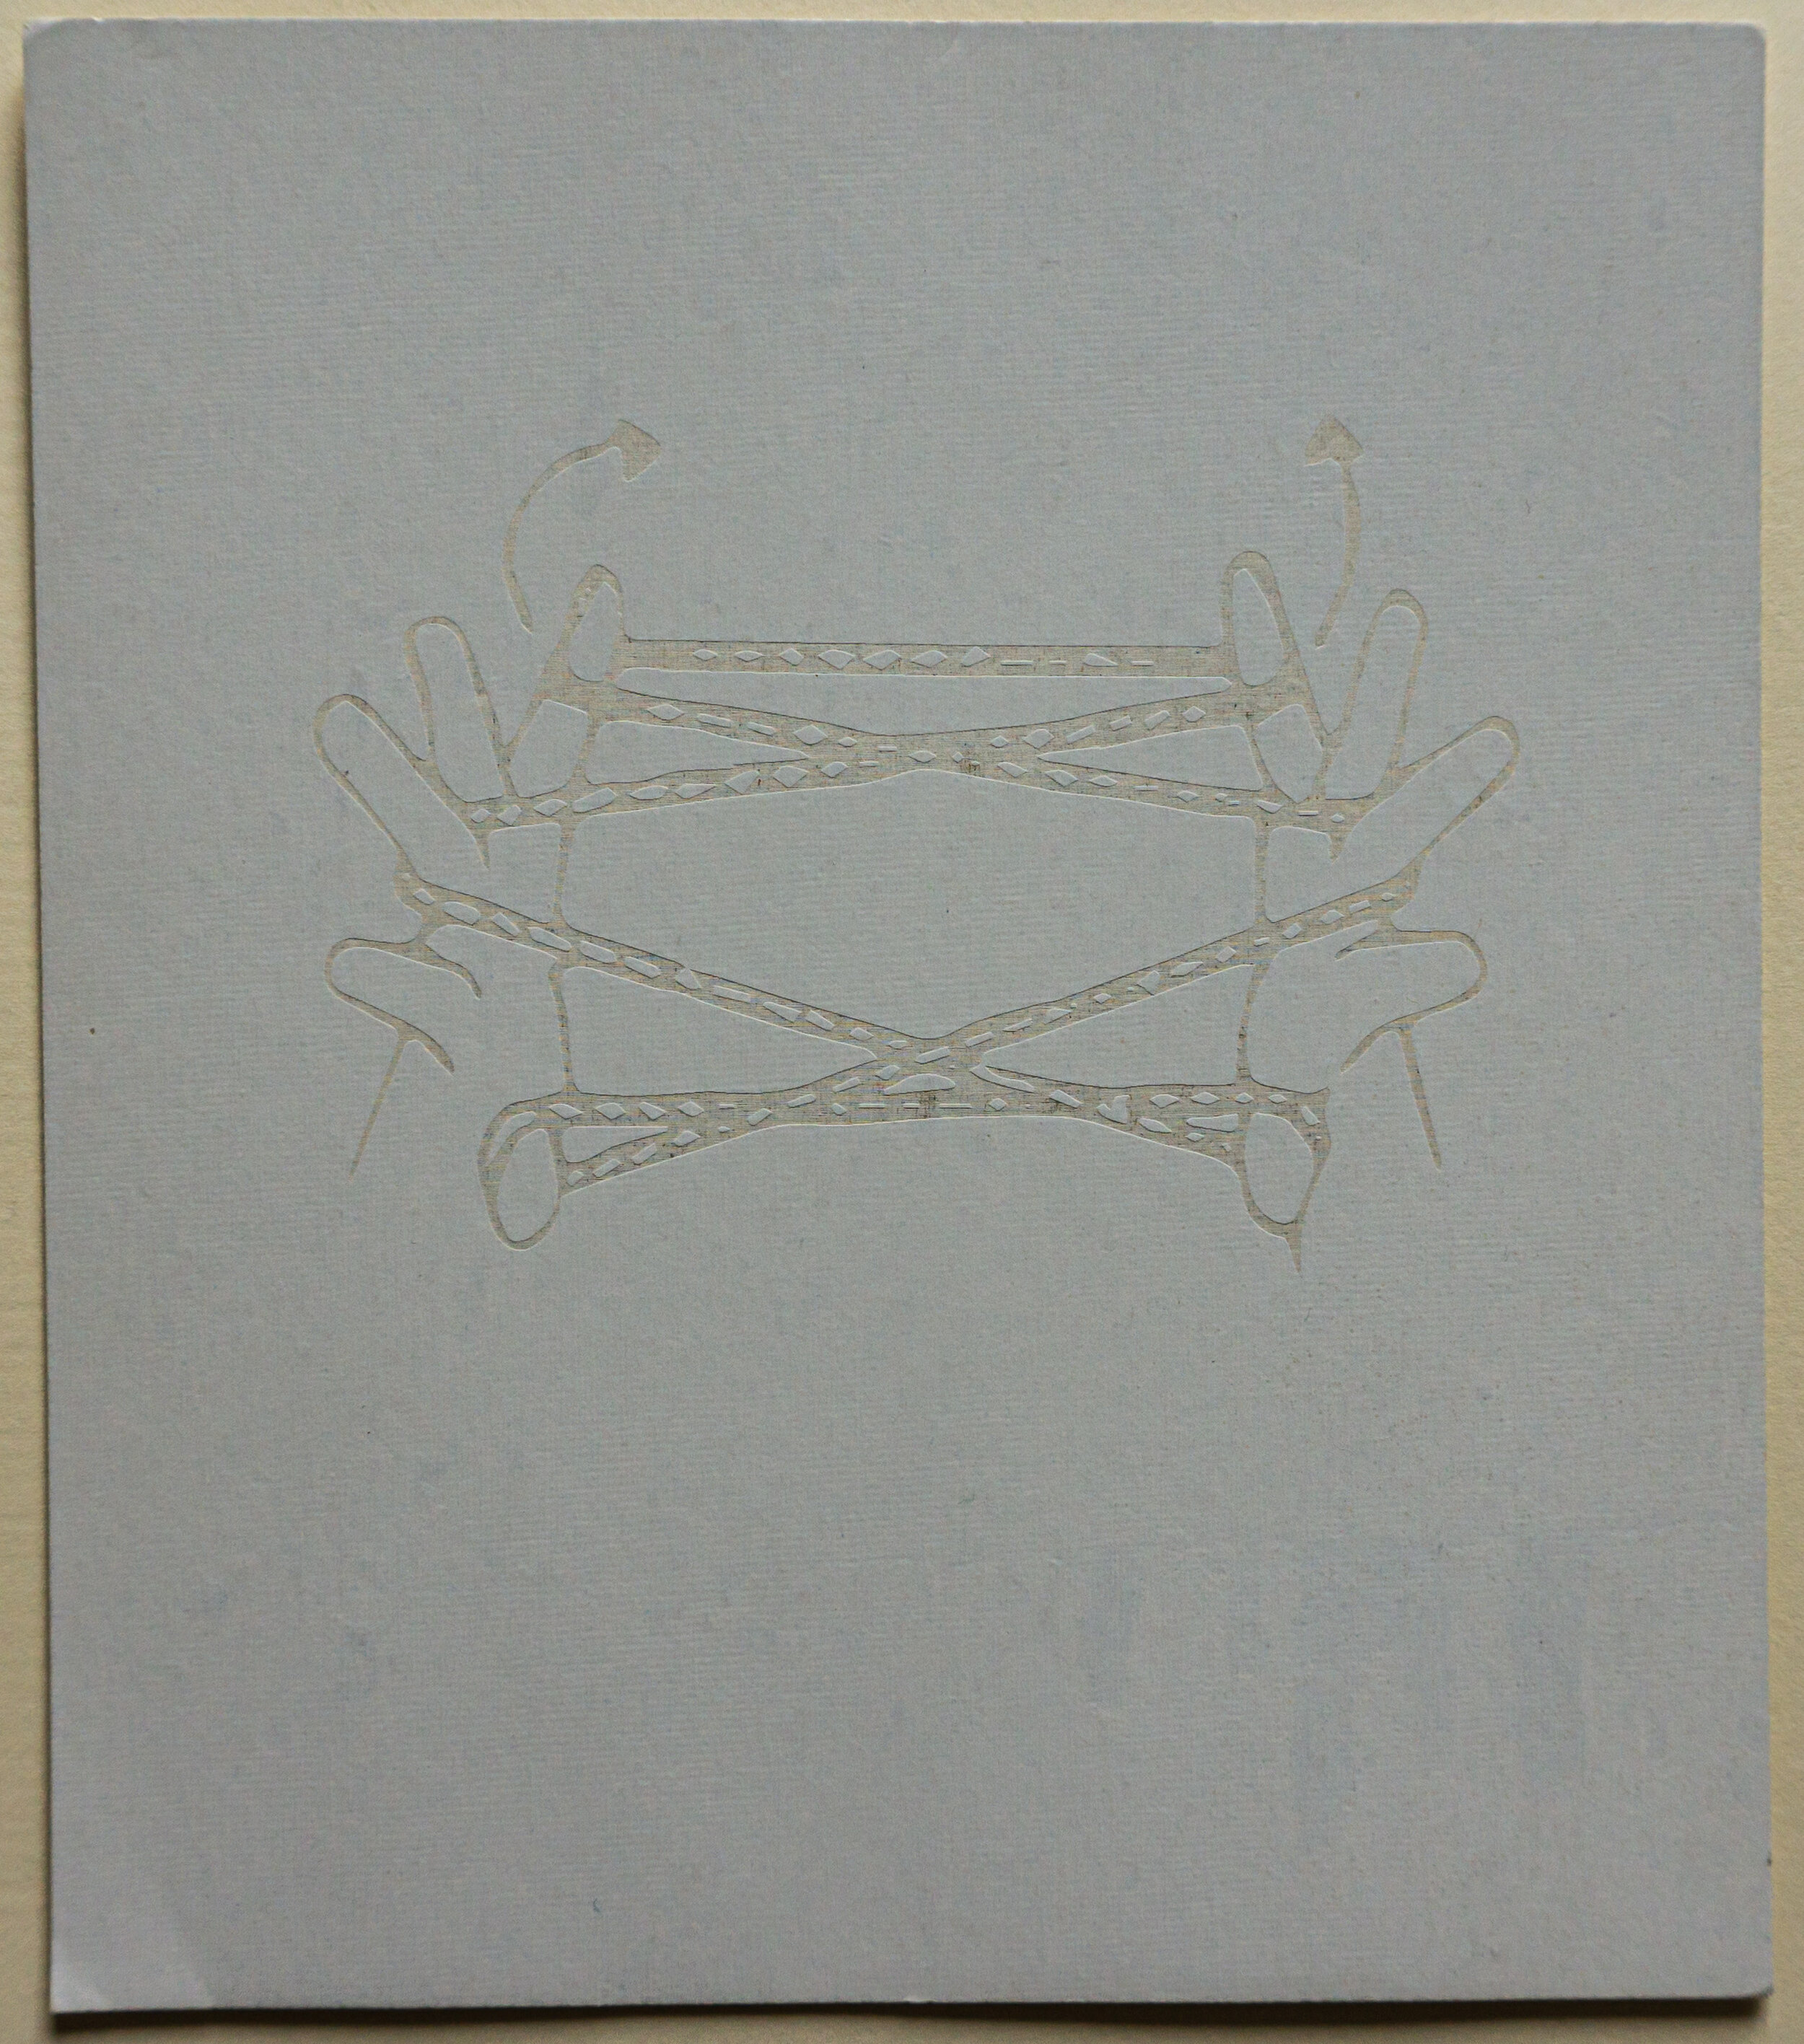 String Figure, 2019, Laser engraved found paper, 4.5" x 4.5"